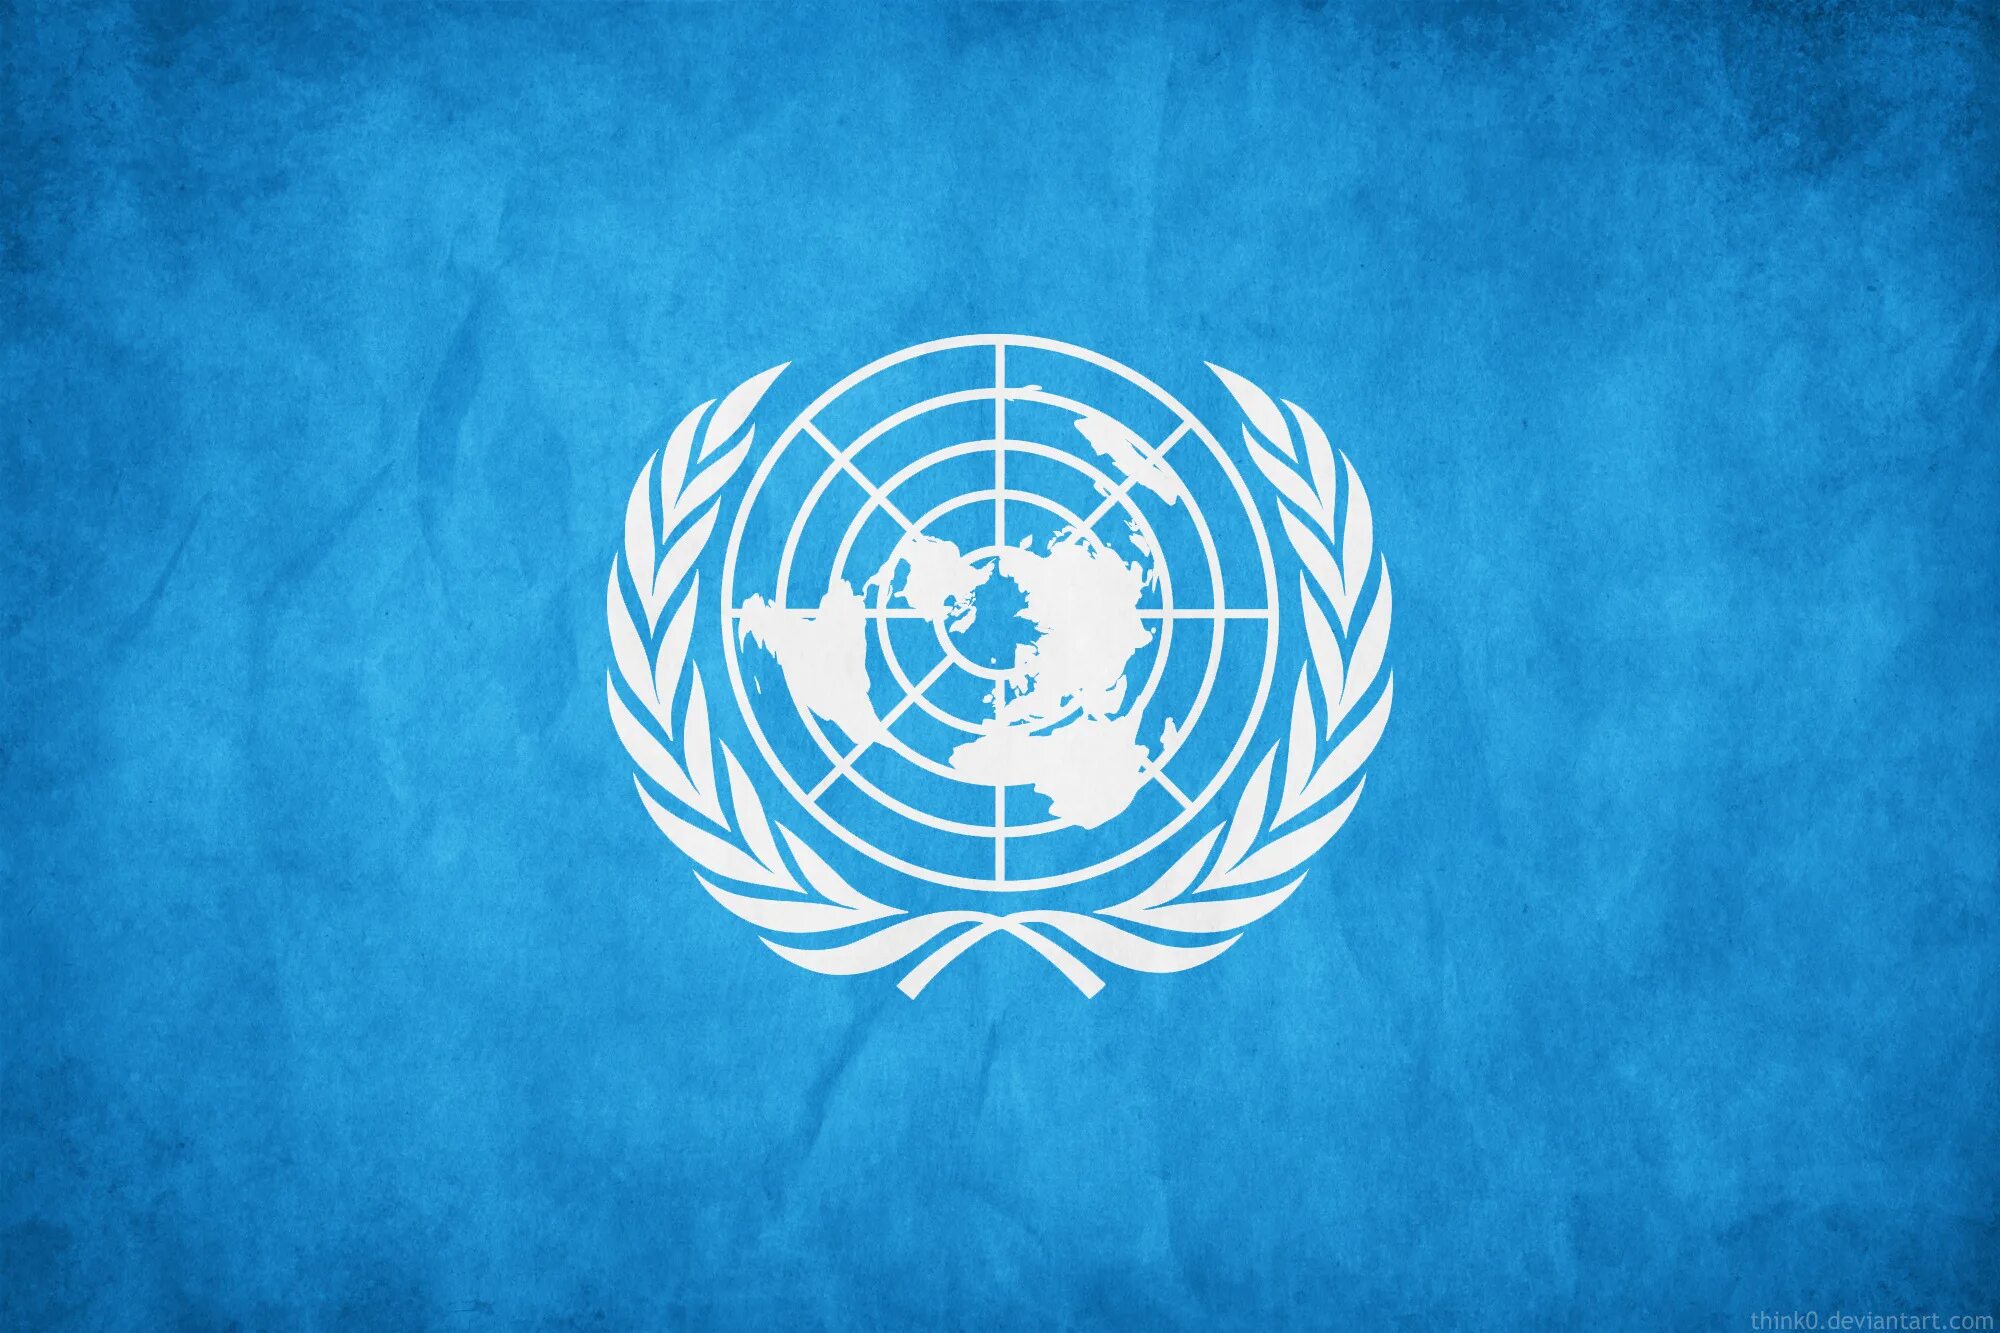 Мировая организация оон. Флаг миротворческих сил ООН. Организация Объединенных наций (ООН). Флаг организации Объединенных наций. Организация Объединенных наций ООН флаг.